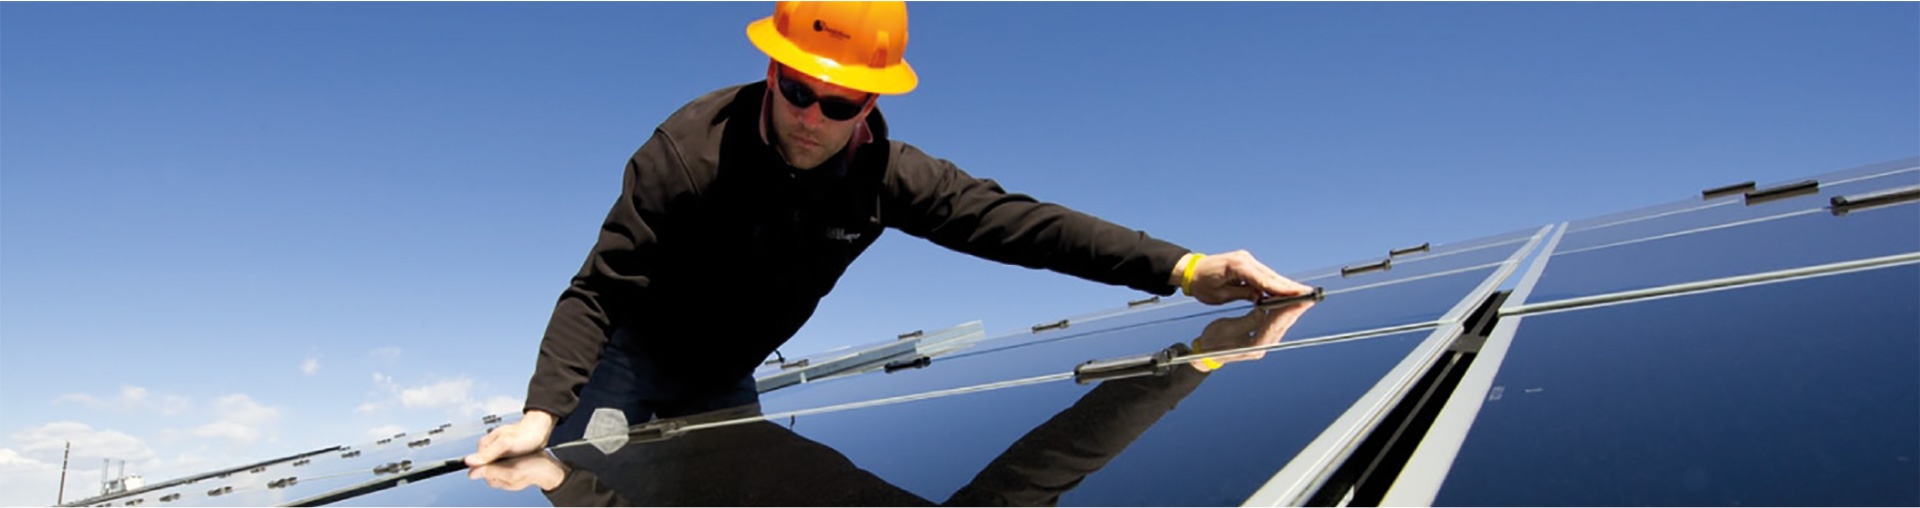 instalacao-profissional-de-painel-solar-modulo-energia